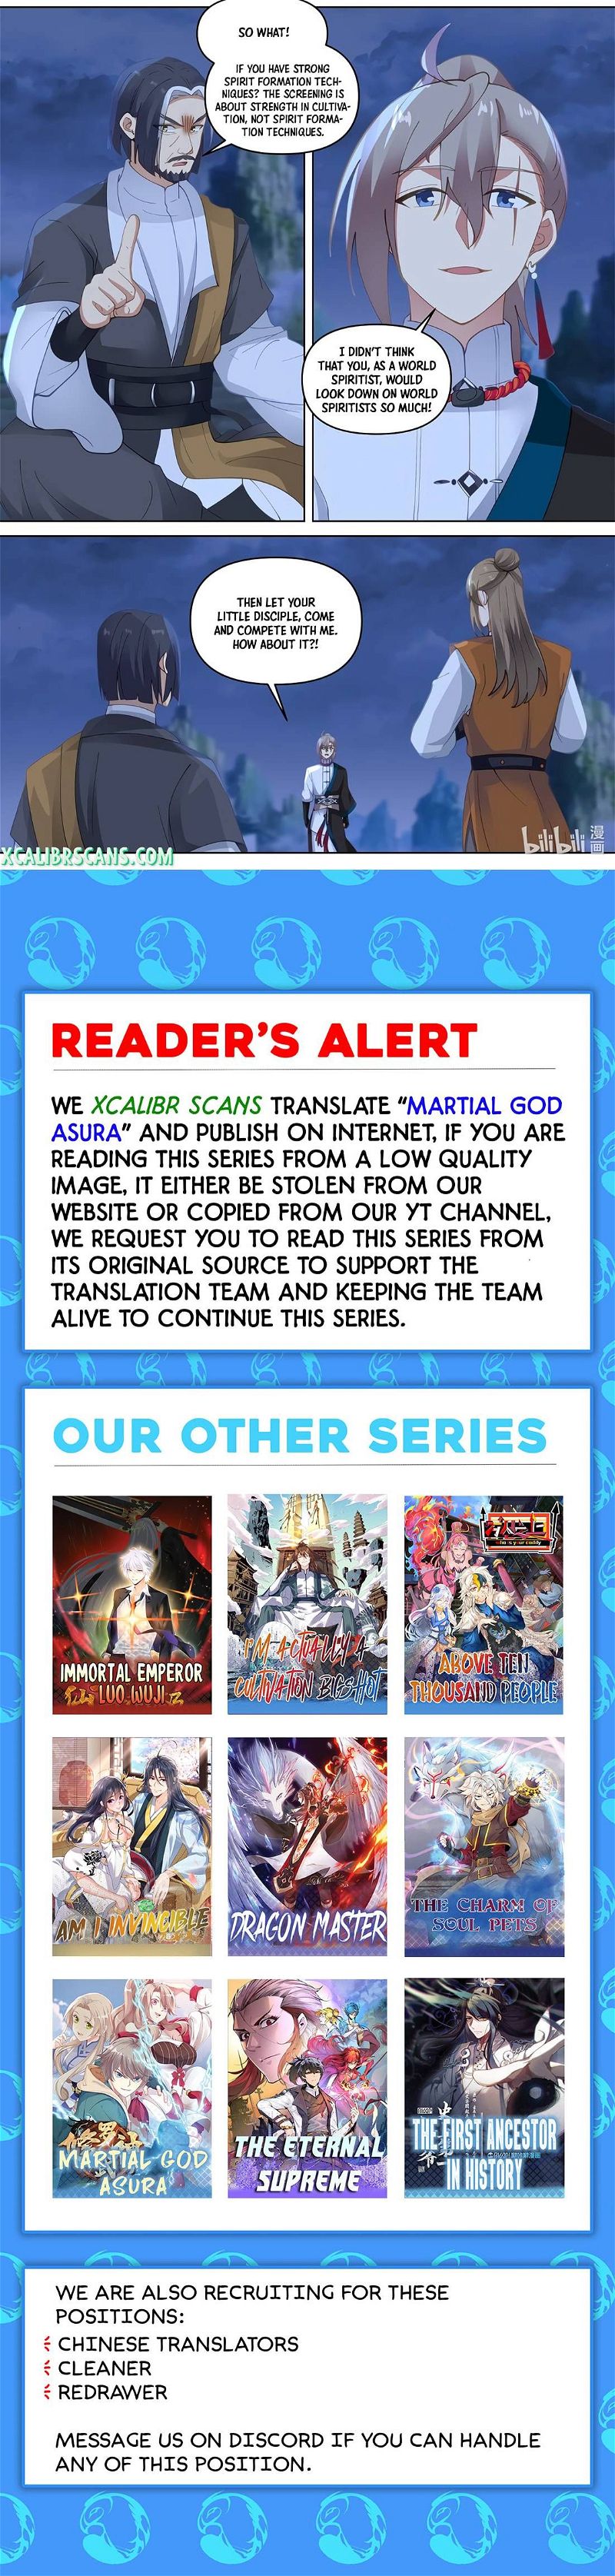 Martial God Asura Chapter 465 page 10